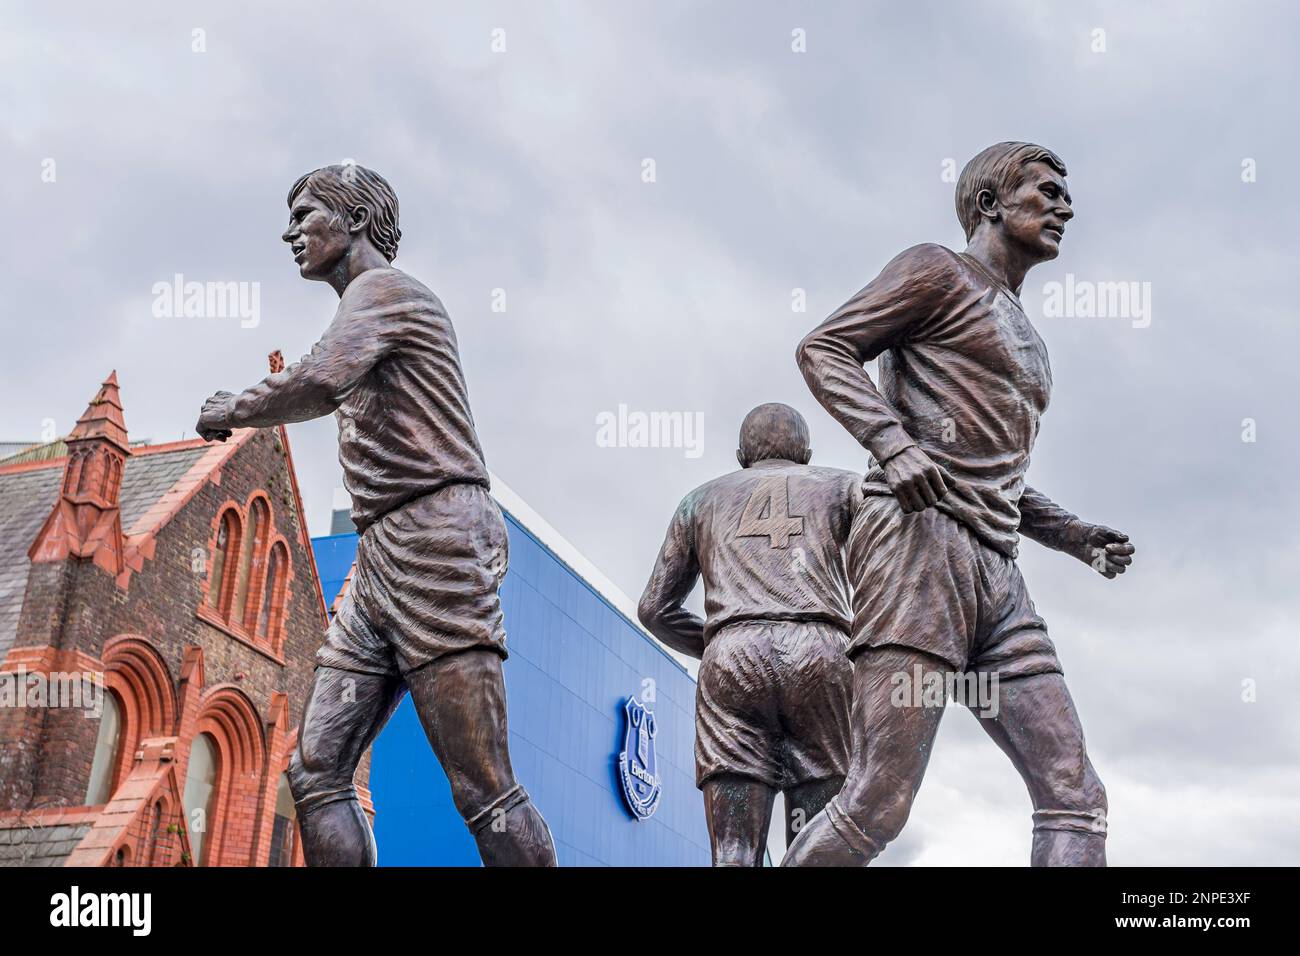 Die Holy Trinity Statue vom Goodison Park in Liverpool zeigt die Everton Football Club Legends Howard Kendall mit Alan Ball und Colin Harvey. Stockfoto